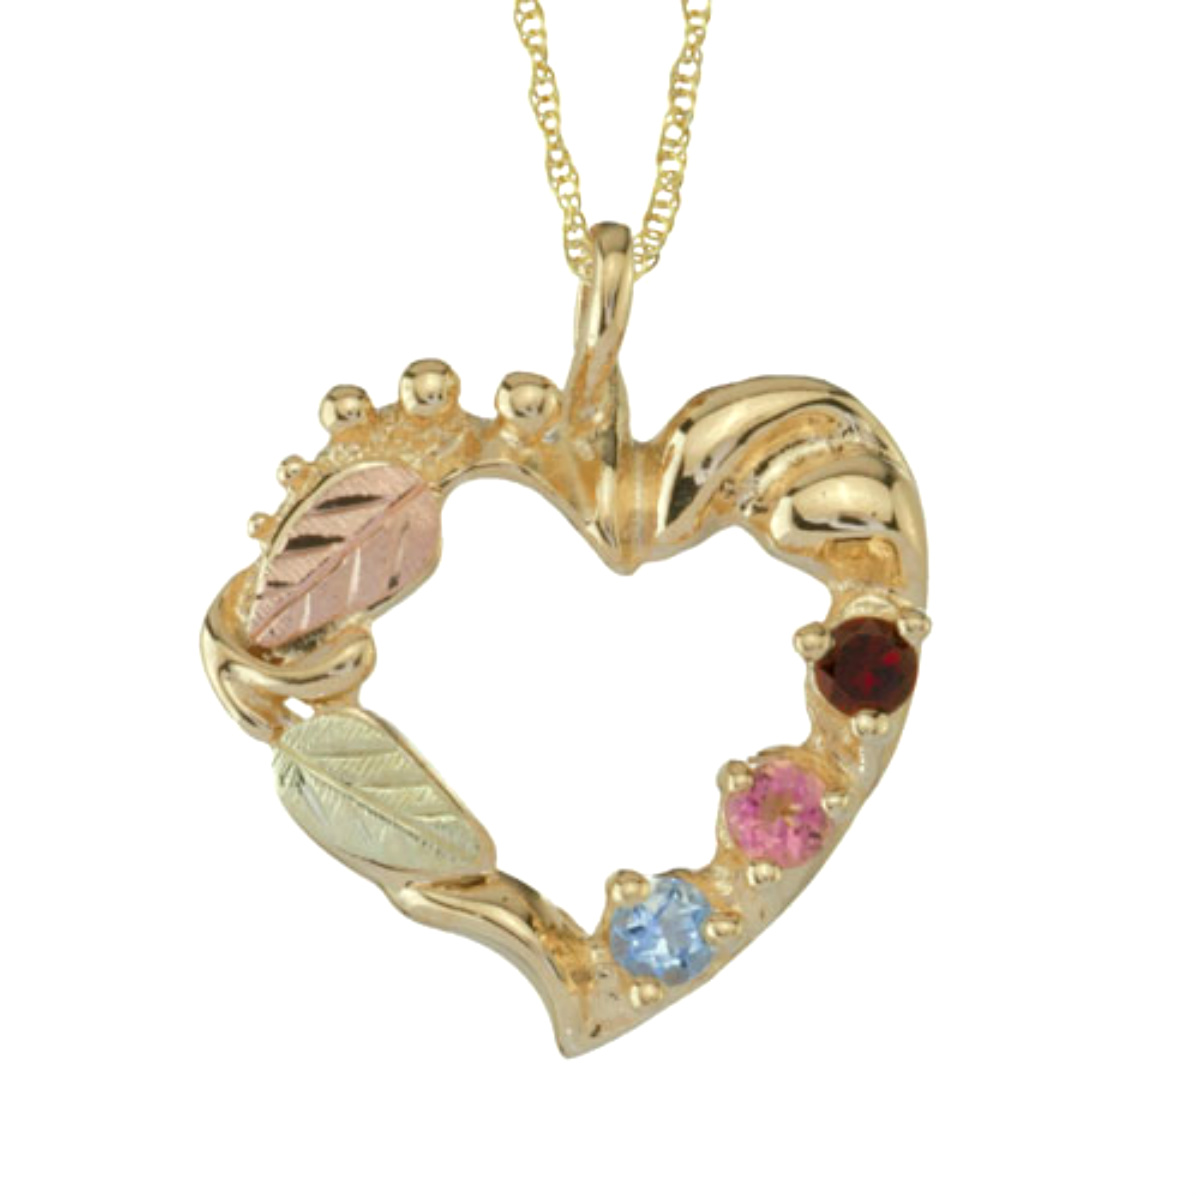 Aquamarine, Pink Tourmaline and Garnet Heart Pendant Necklace, 10k Yellow Gold, 12k Green and Rose Gold Black Hills Gold